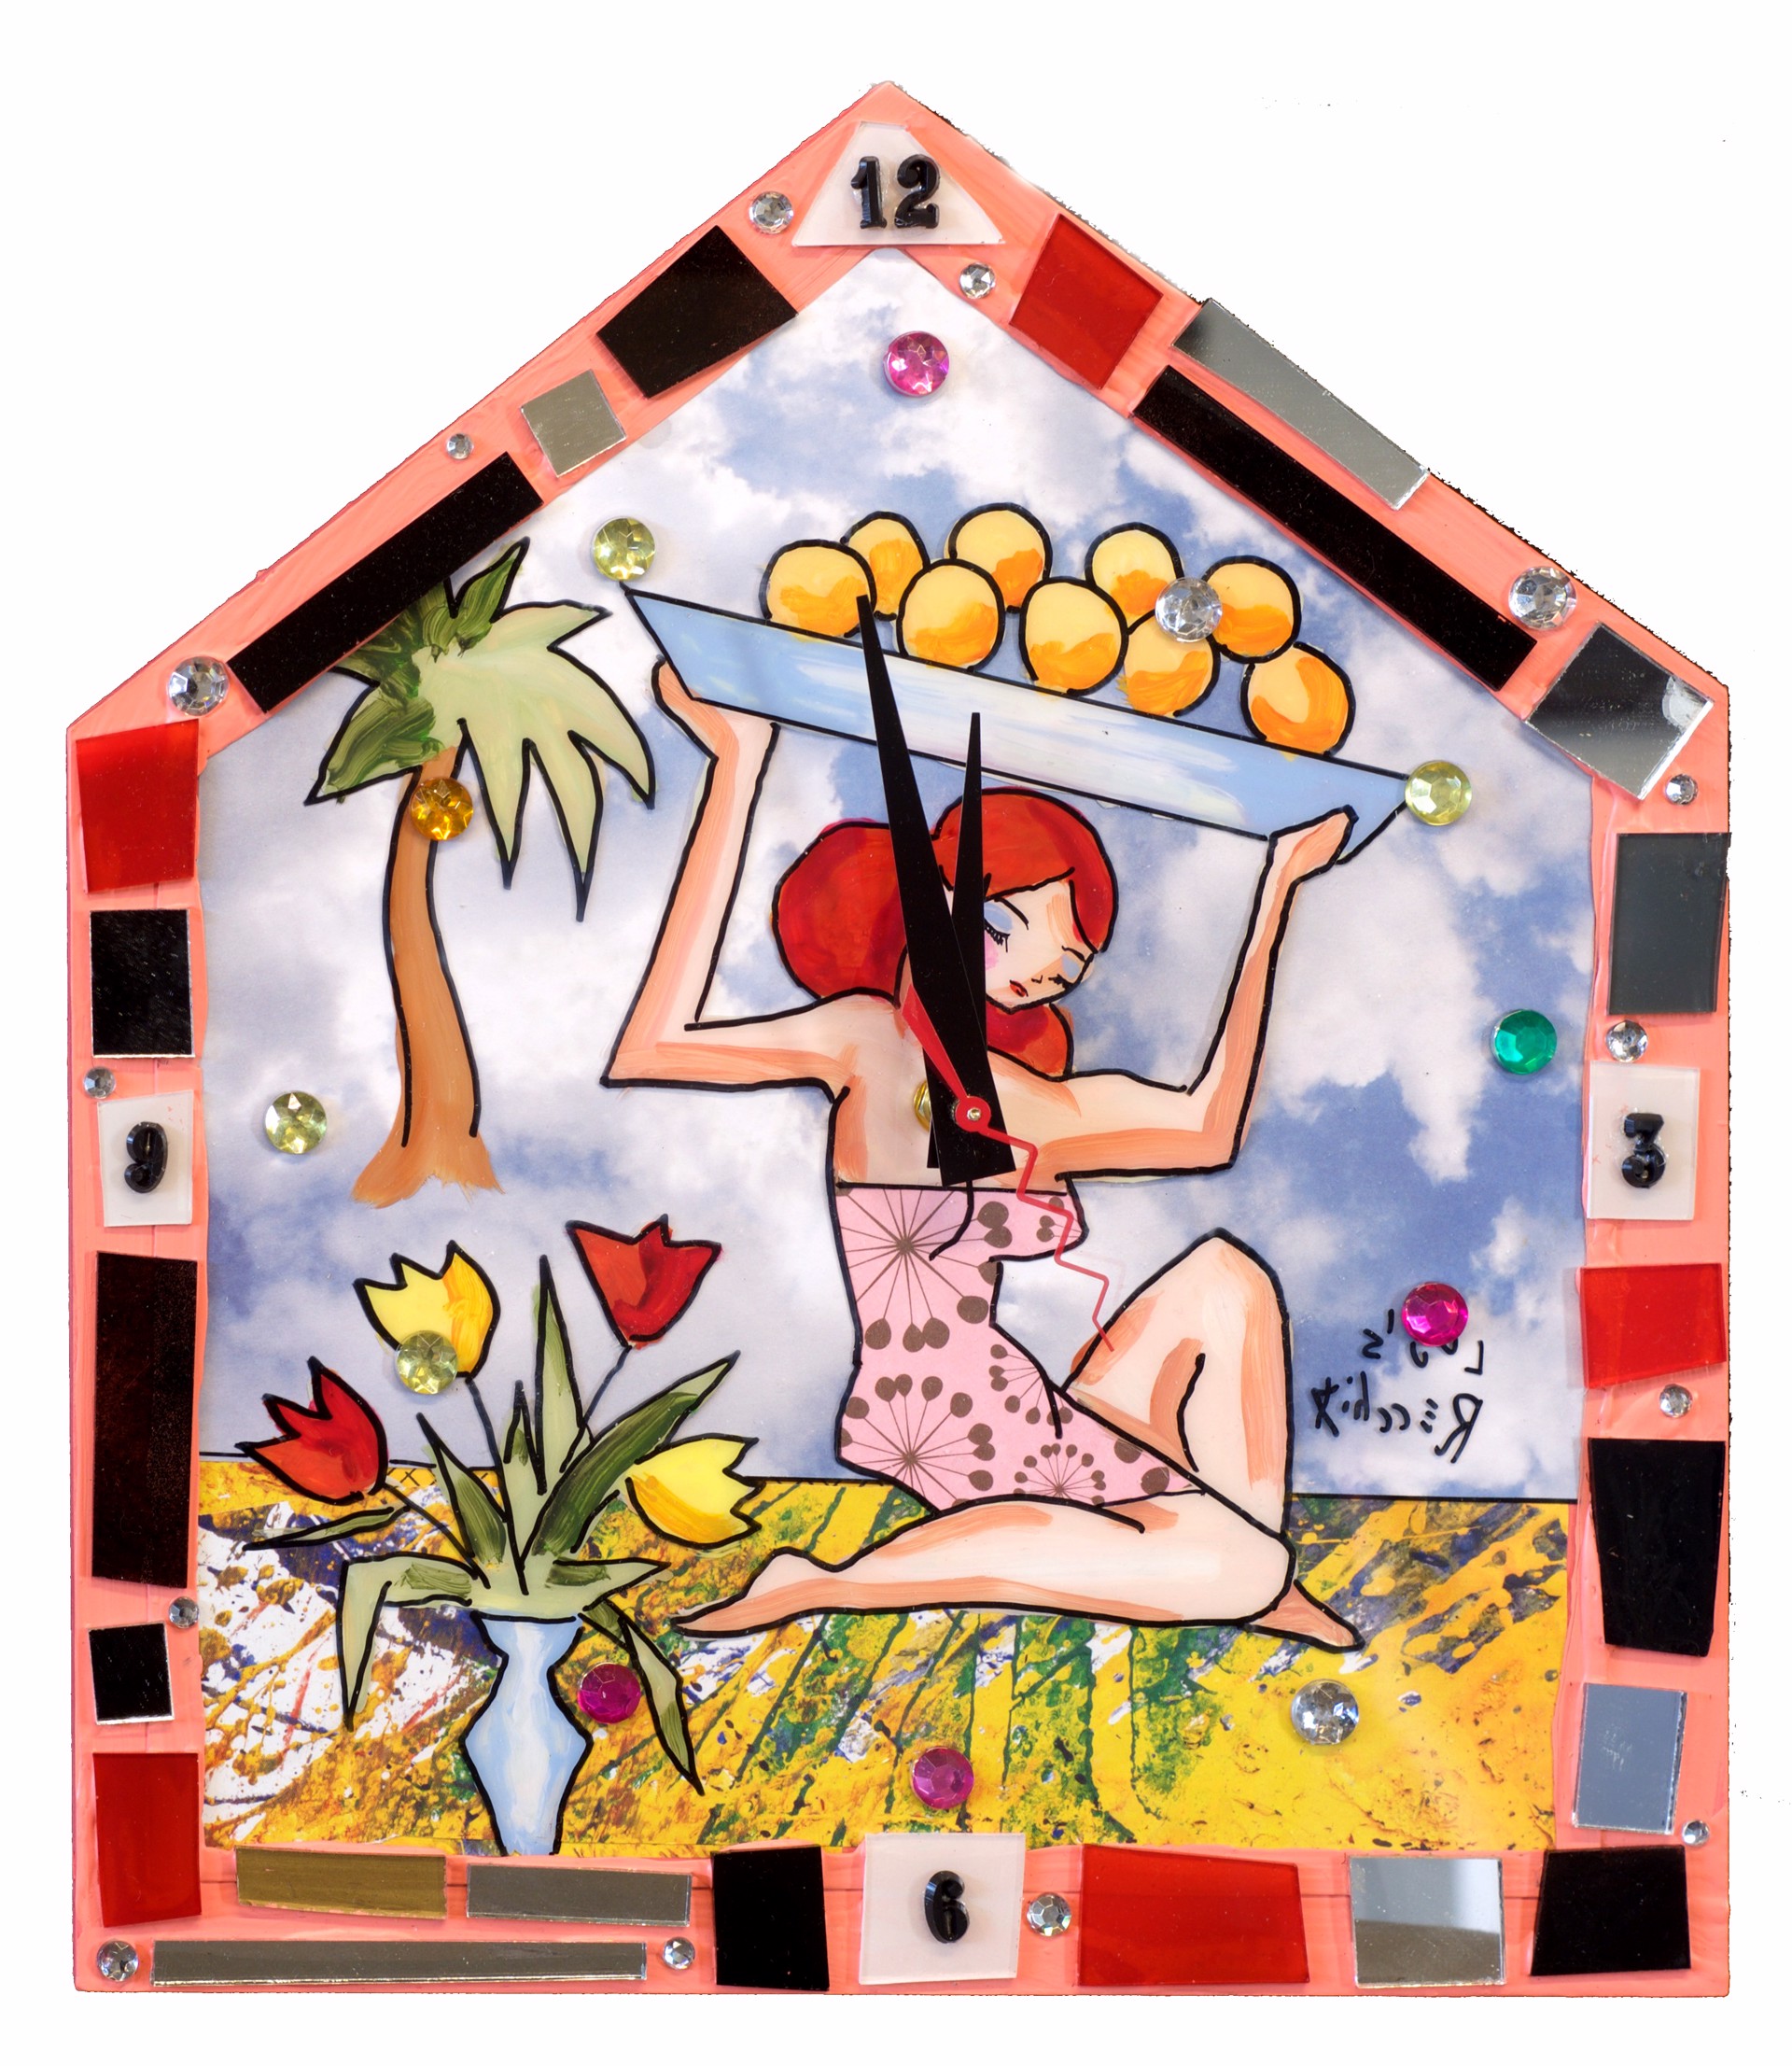 Tropical Fruit Clock by Louis Recchia